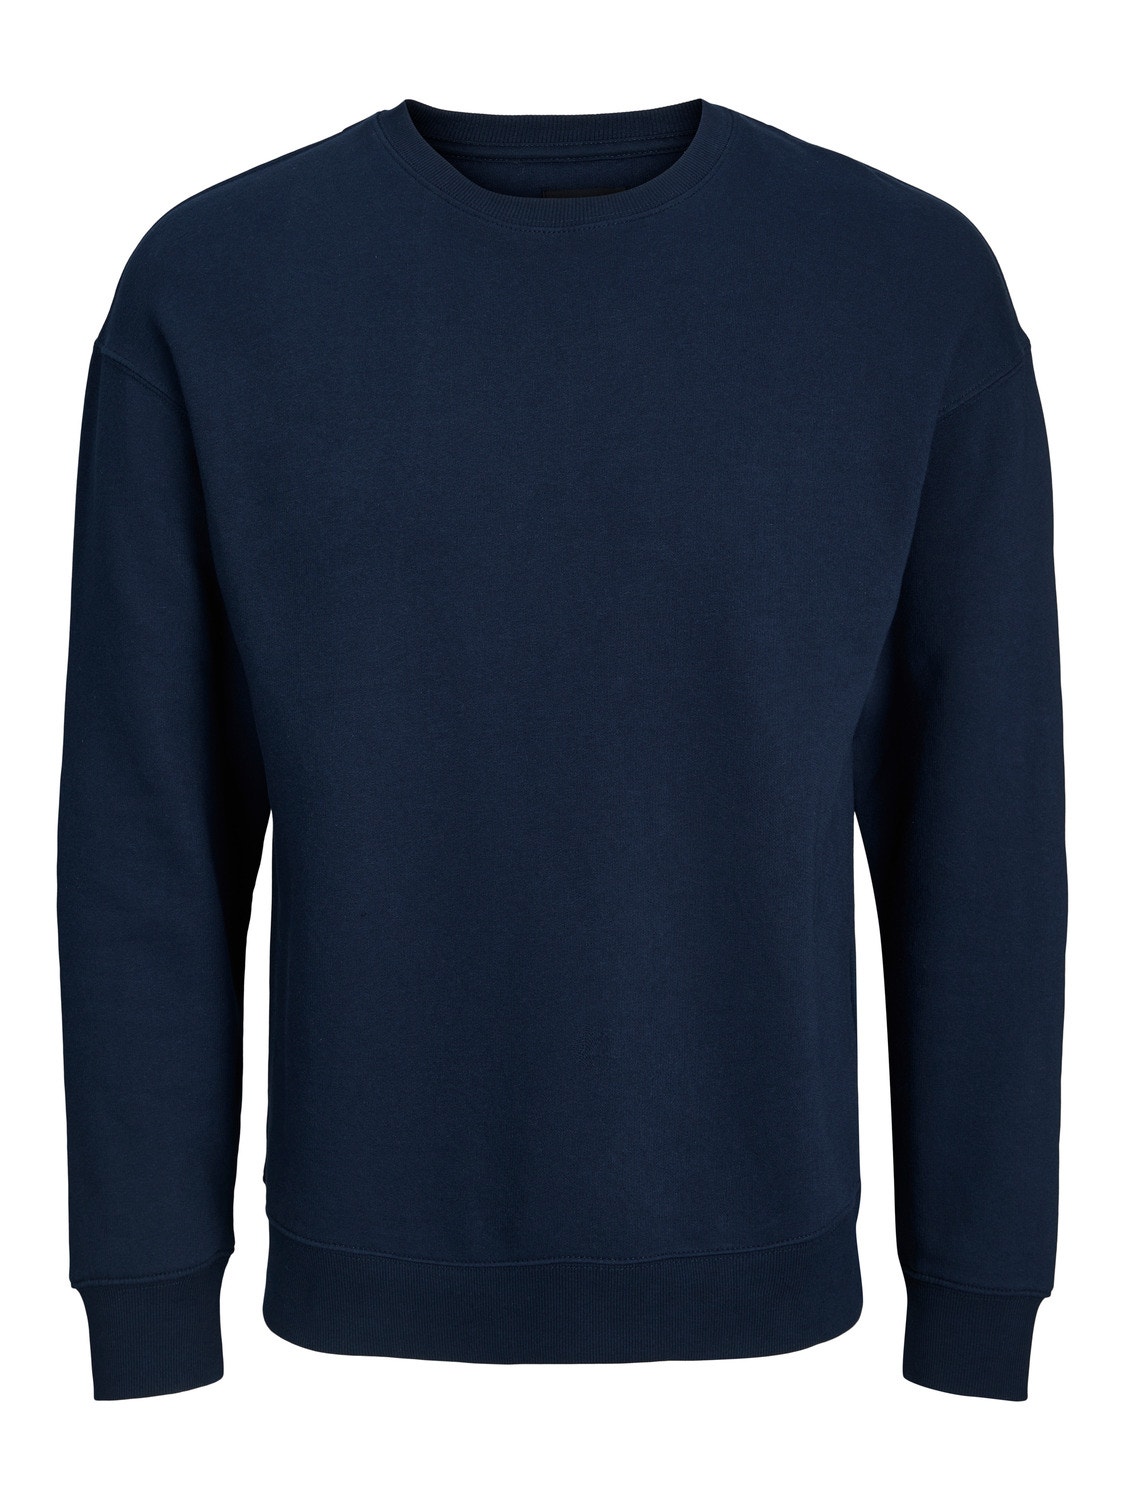 Jack & Jones Plus Size Plain Crewn Neck Sweatshirt -Navy Blazer - 12250594